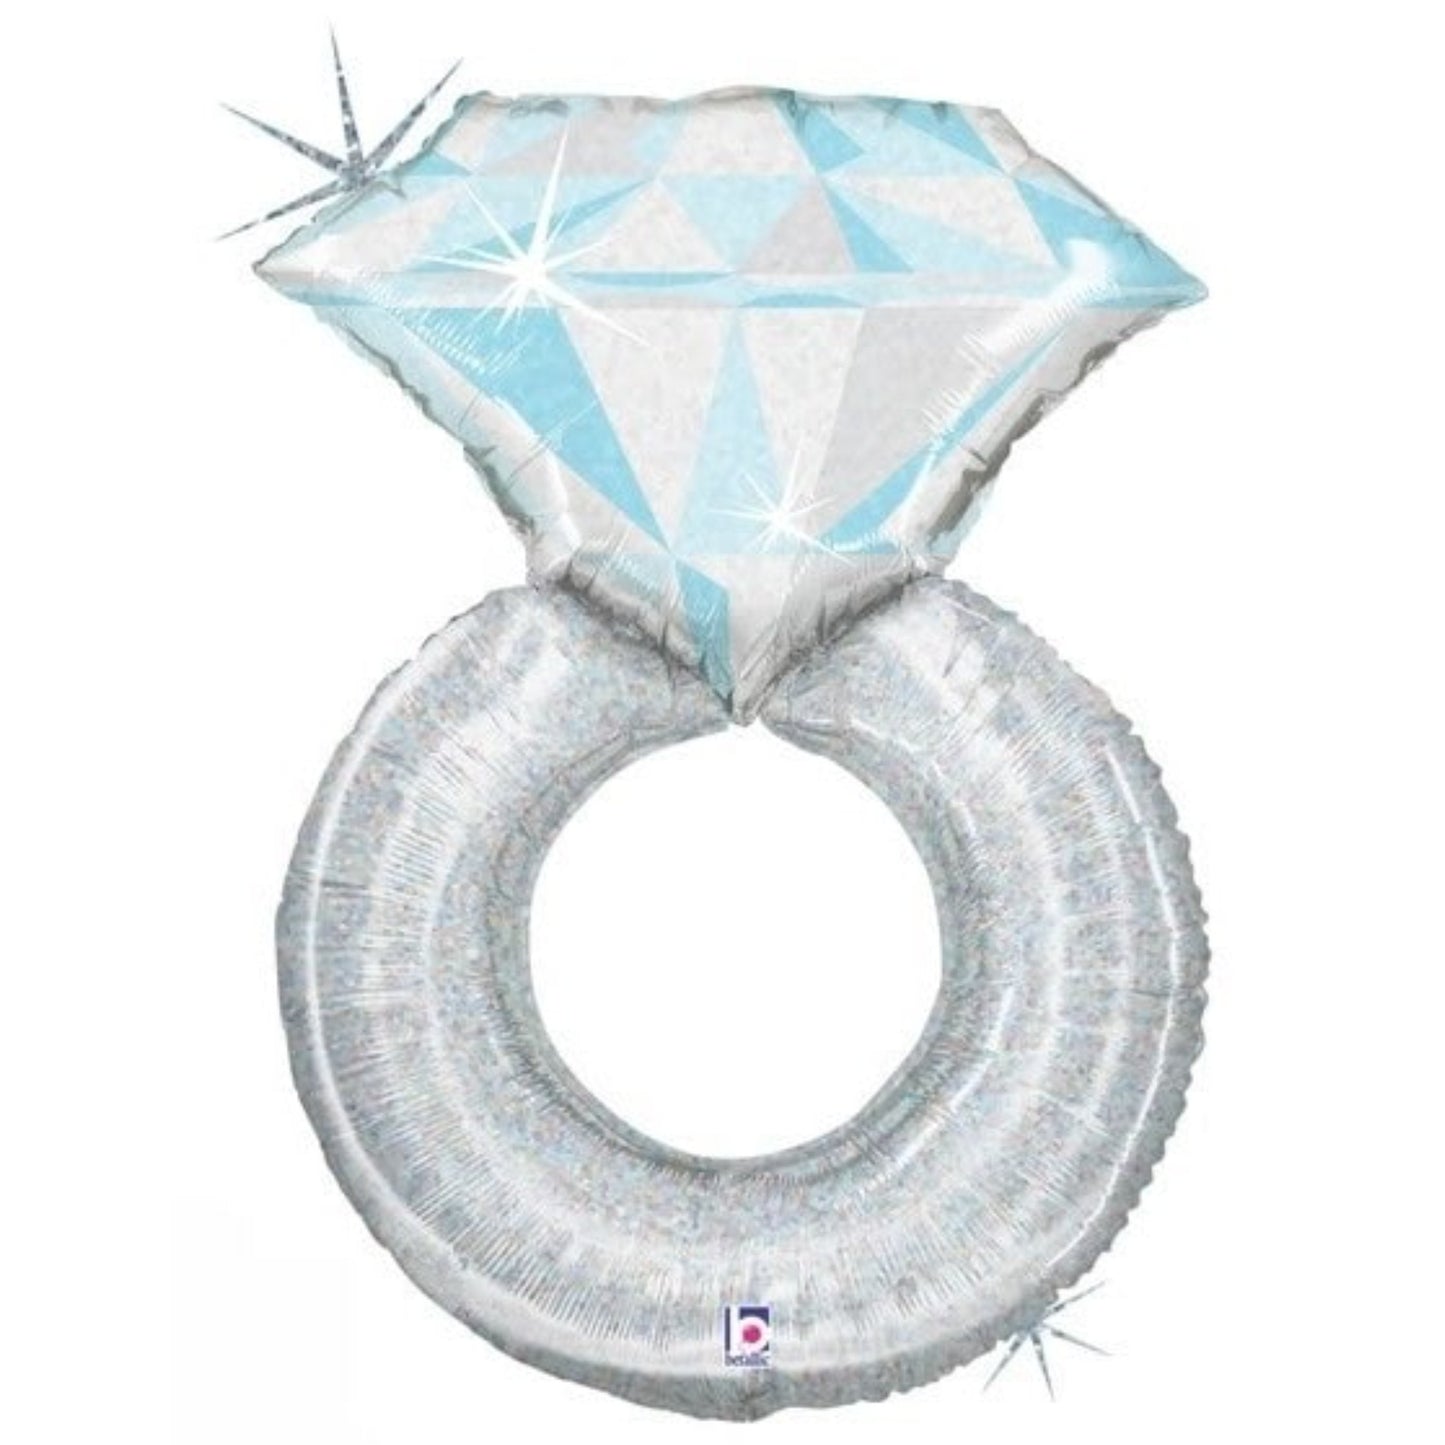 Holographic Diamond Ring Balloon